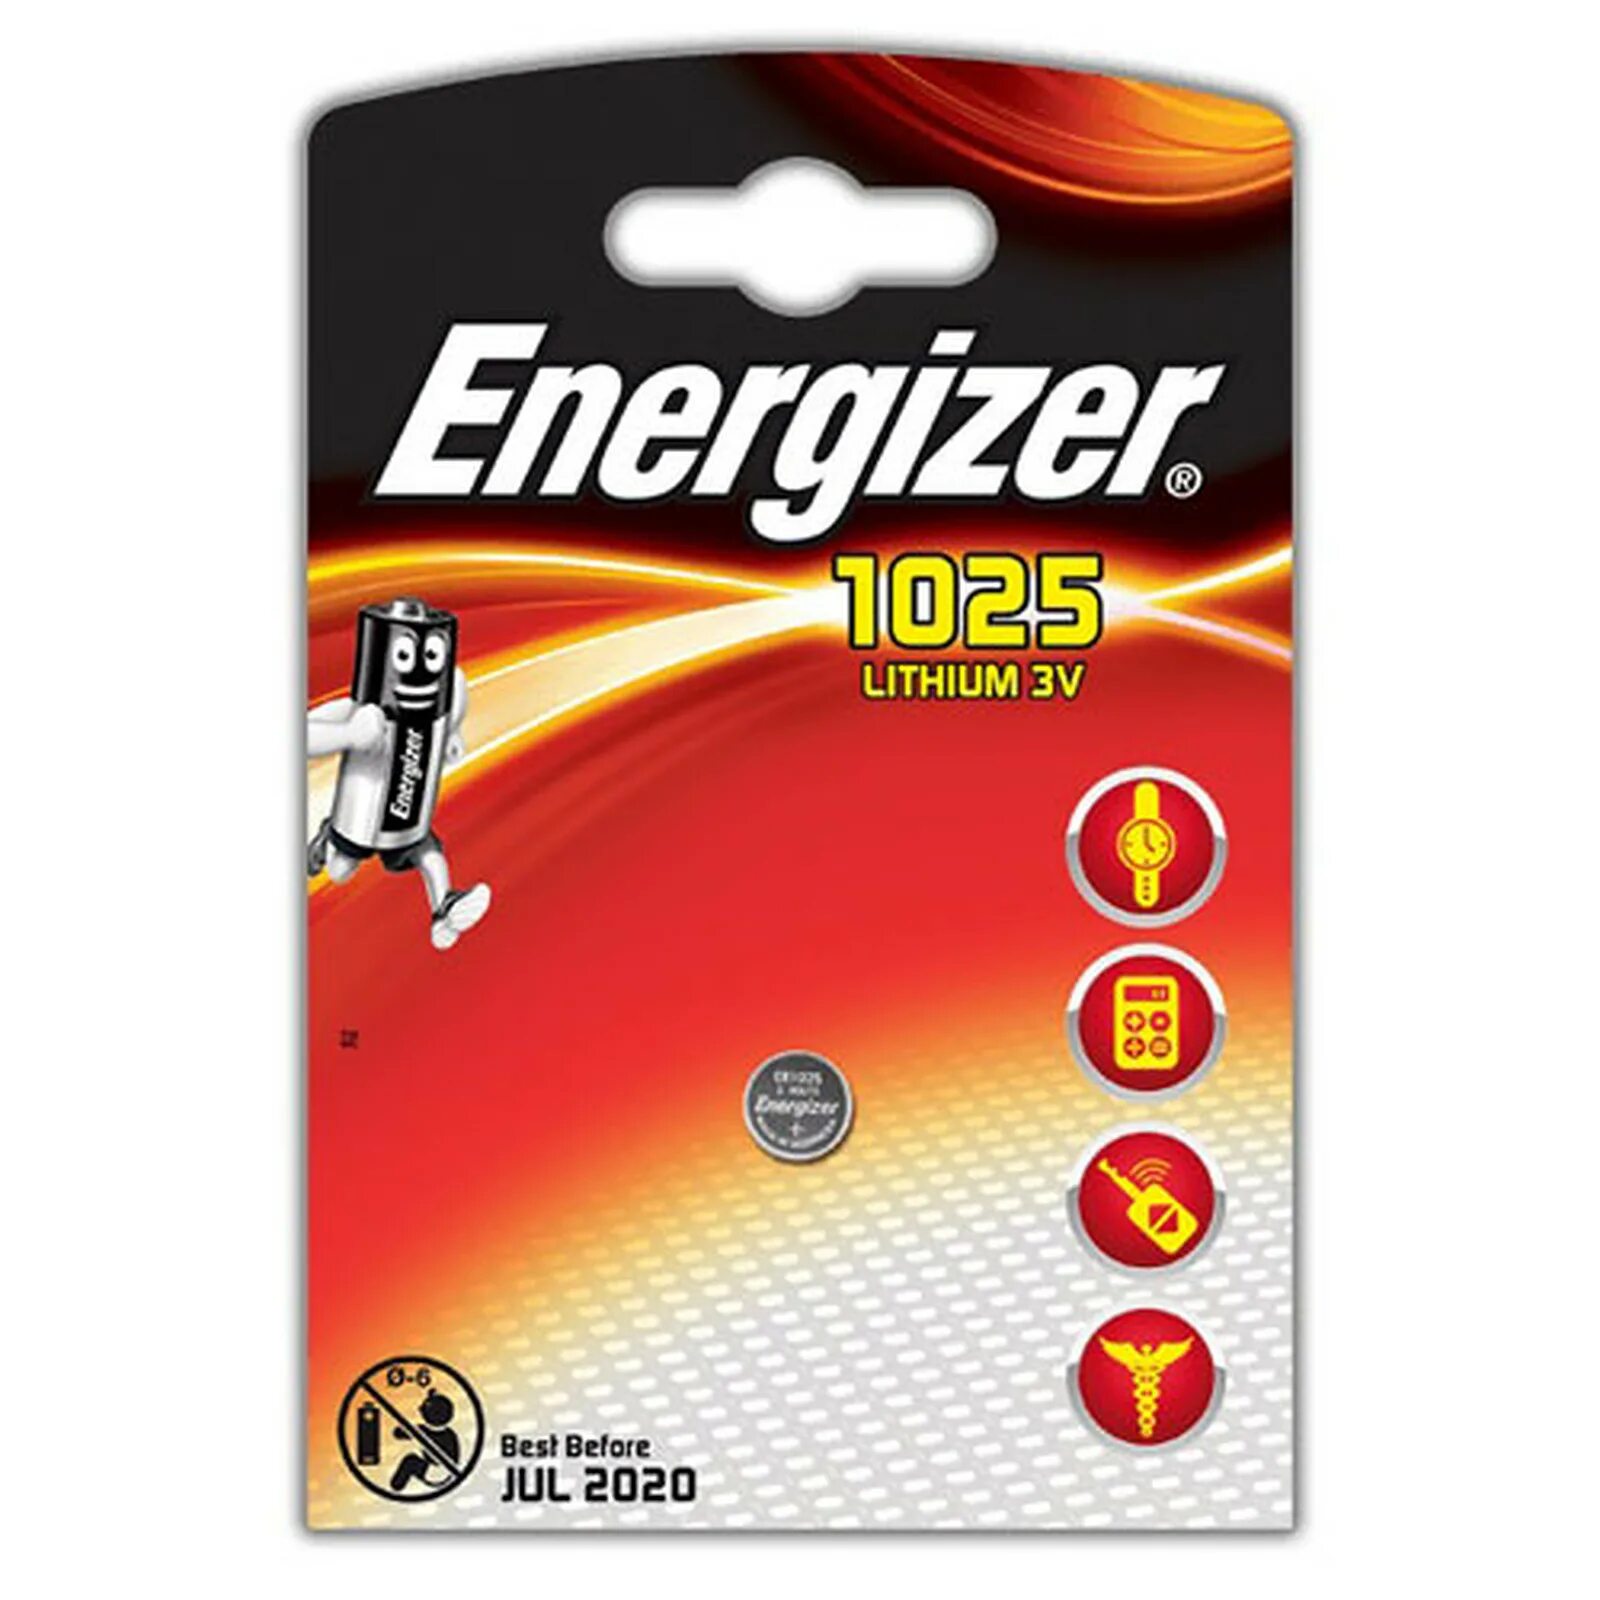 Energizer cr2032/1bl. Батарейка cr2450 Energizer Lithium 3v. Элемент питания cr2450 2bp Energizer. Батарейка Energizer lr54/189.